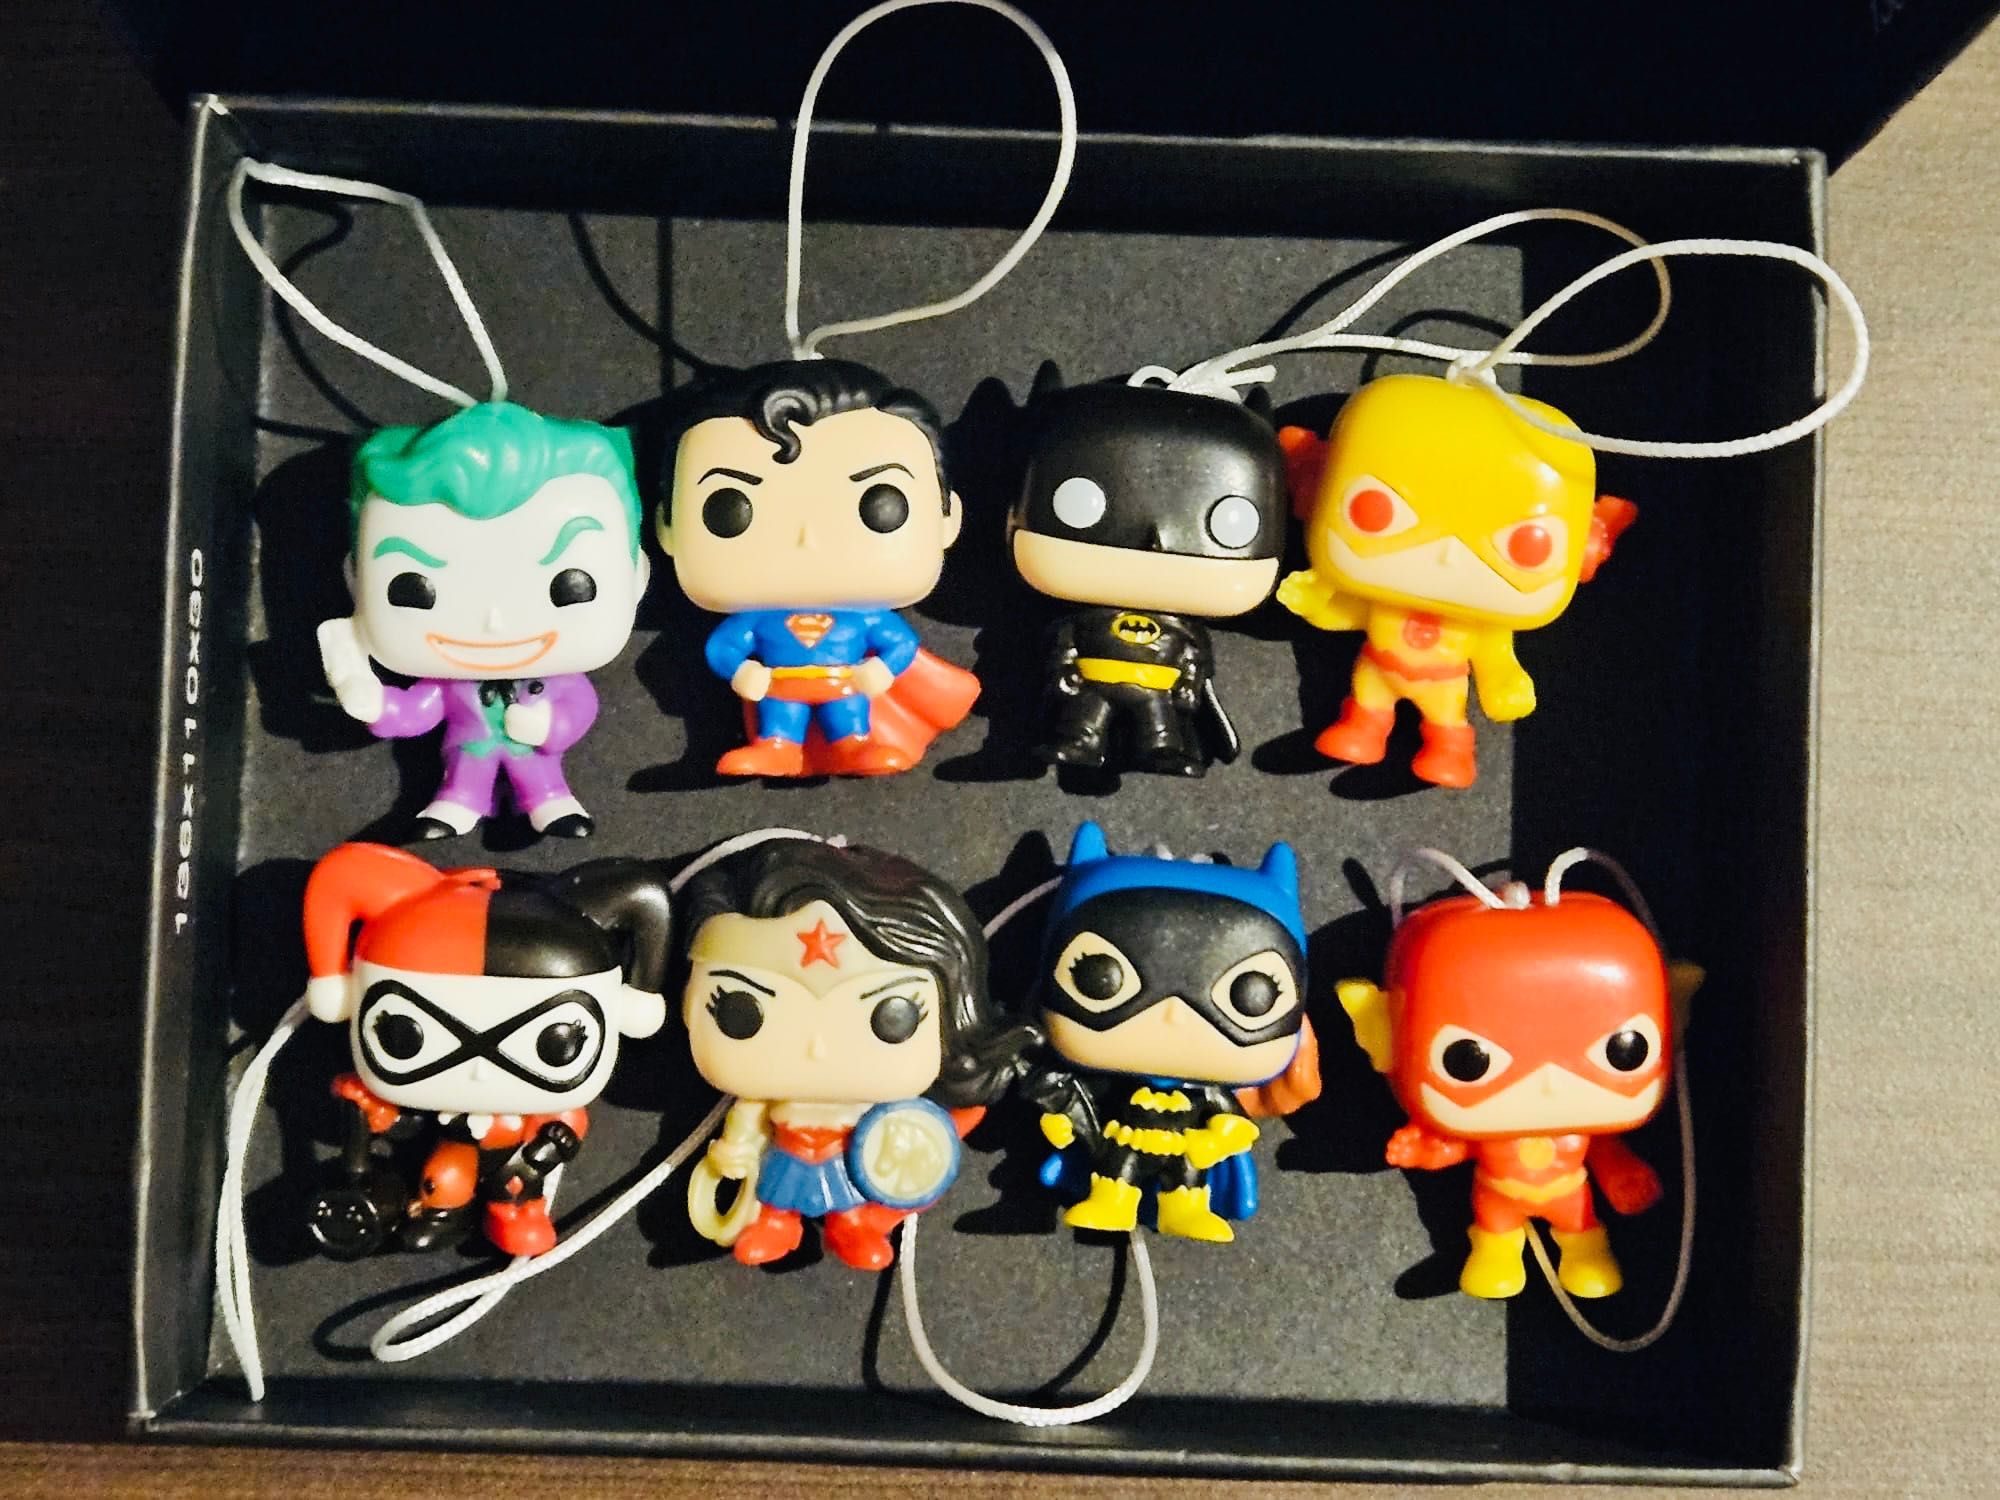 Colecție funko pop superheroes DC - Kinder joy